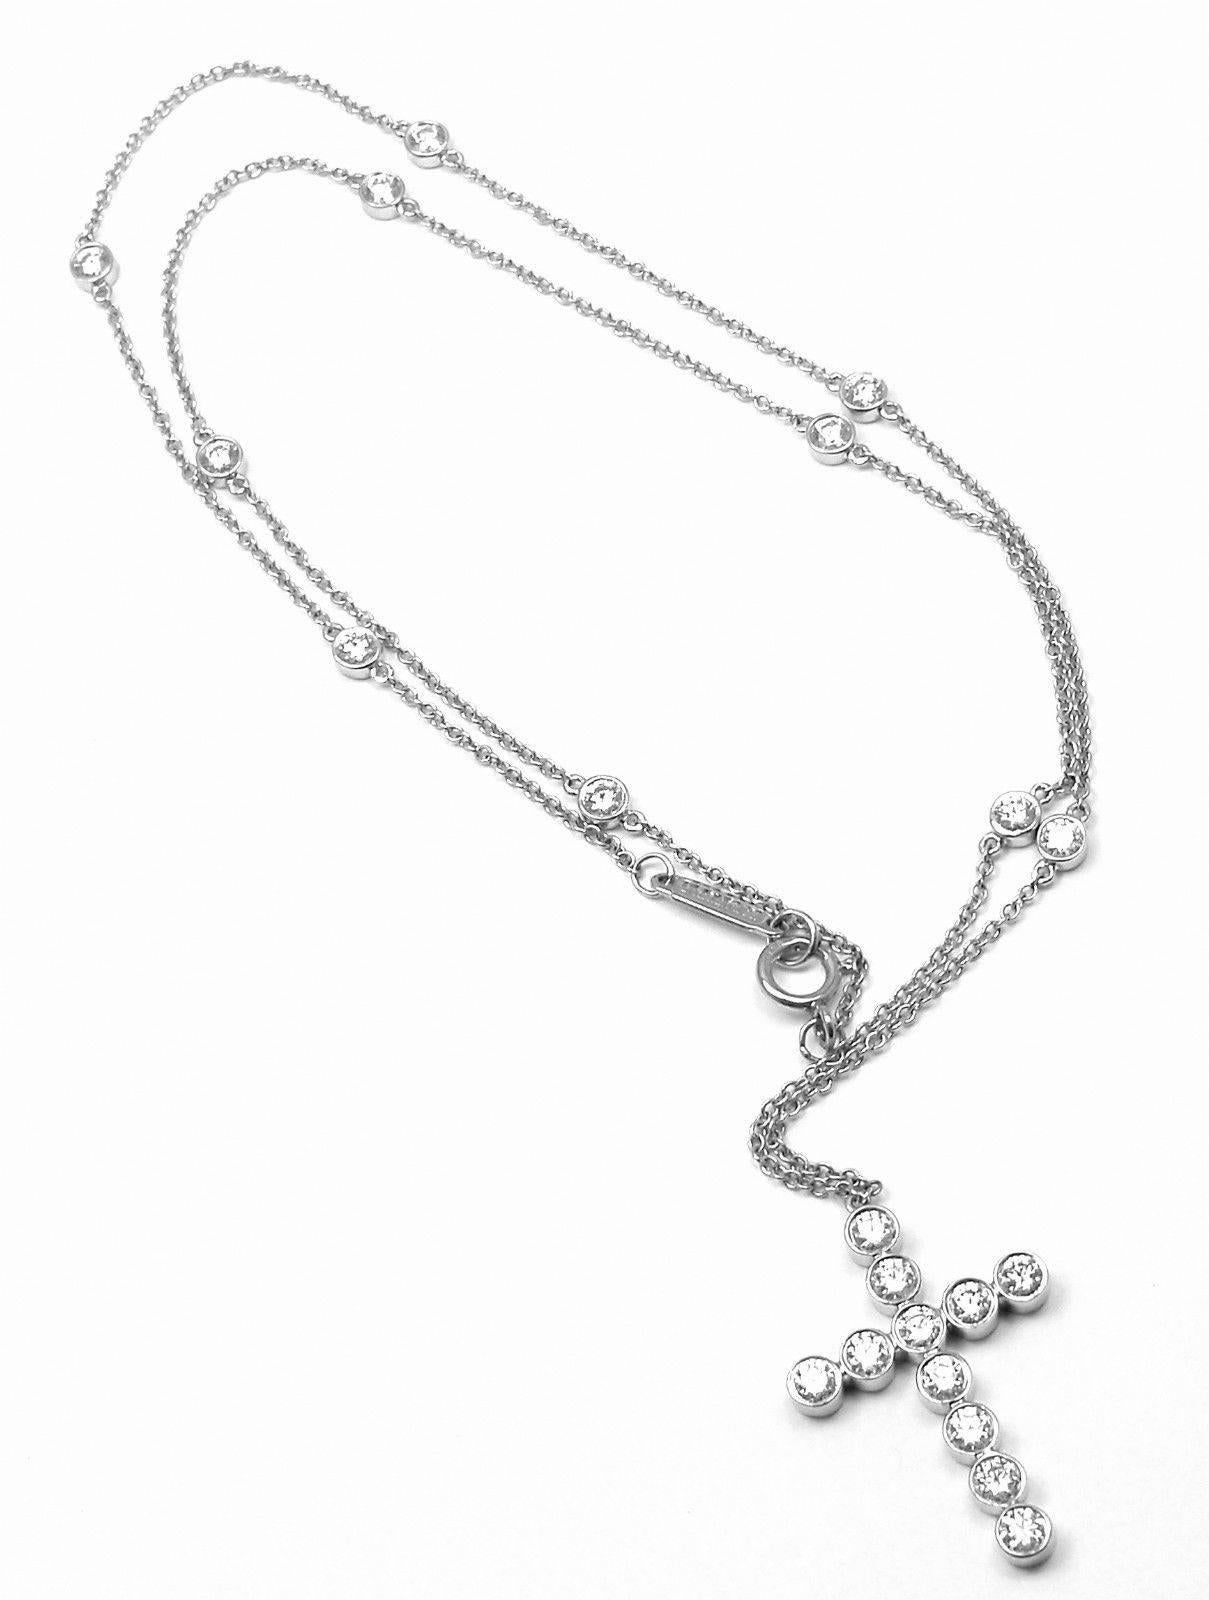 Platinum Diamond Jazz Cross Pendant Necklace by Tiffany & Co.
With 21 round brilliant cut diamonds  
t/w = 1.25ct.  VS1 clarity E-G color

Details:
Measurements: Necklace Length: 16